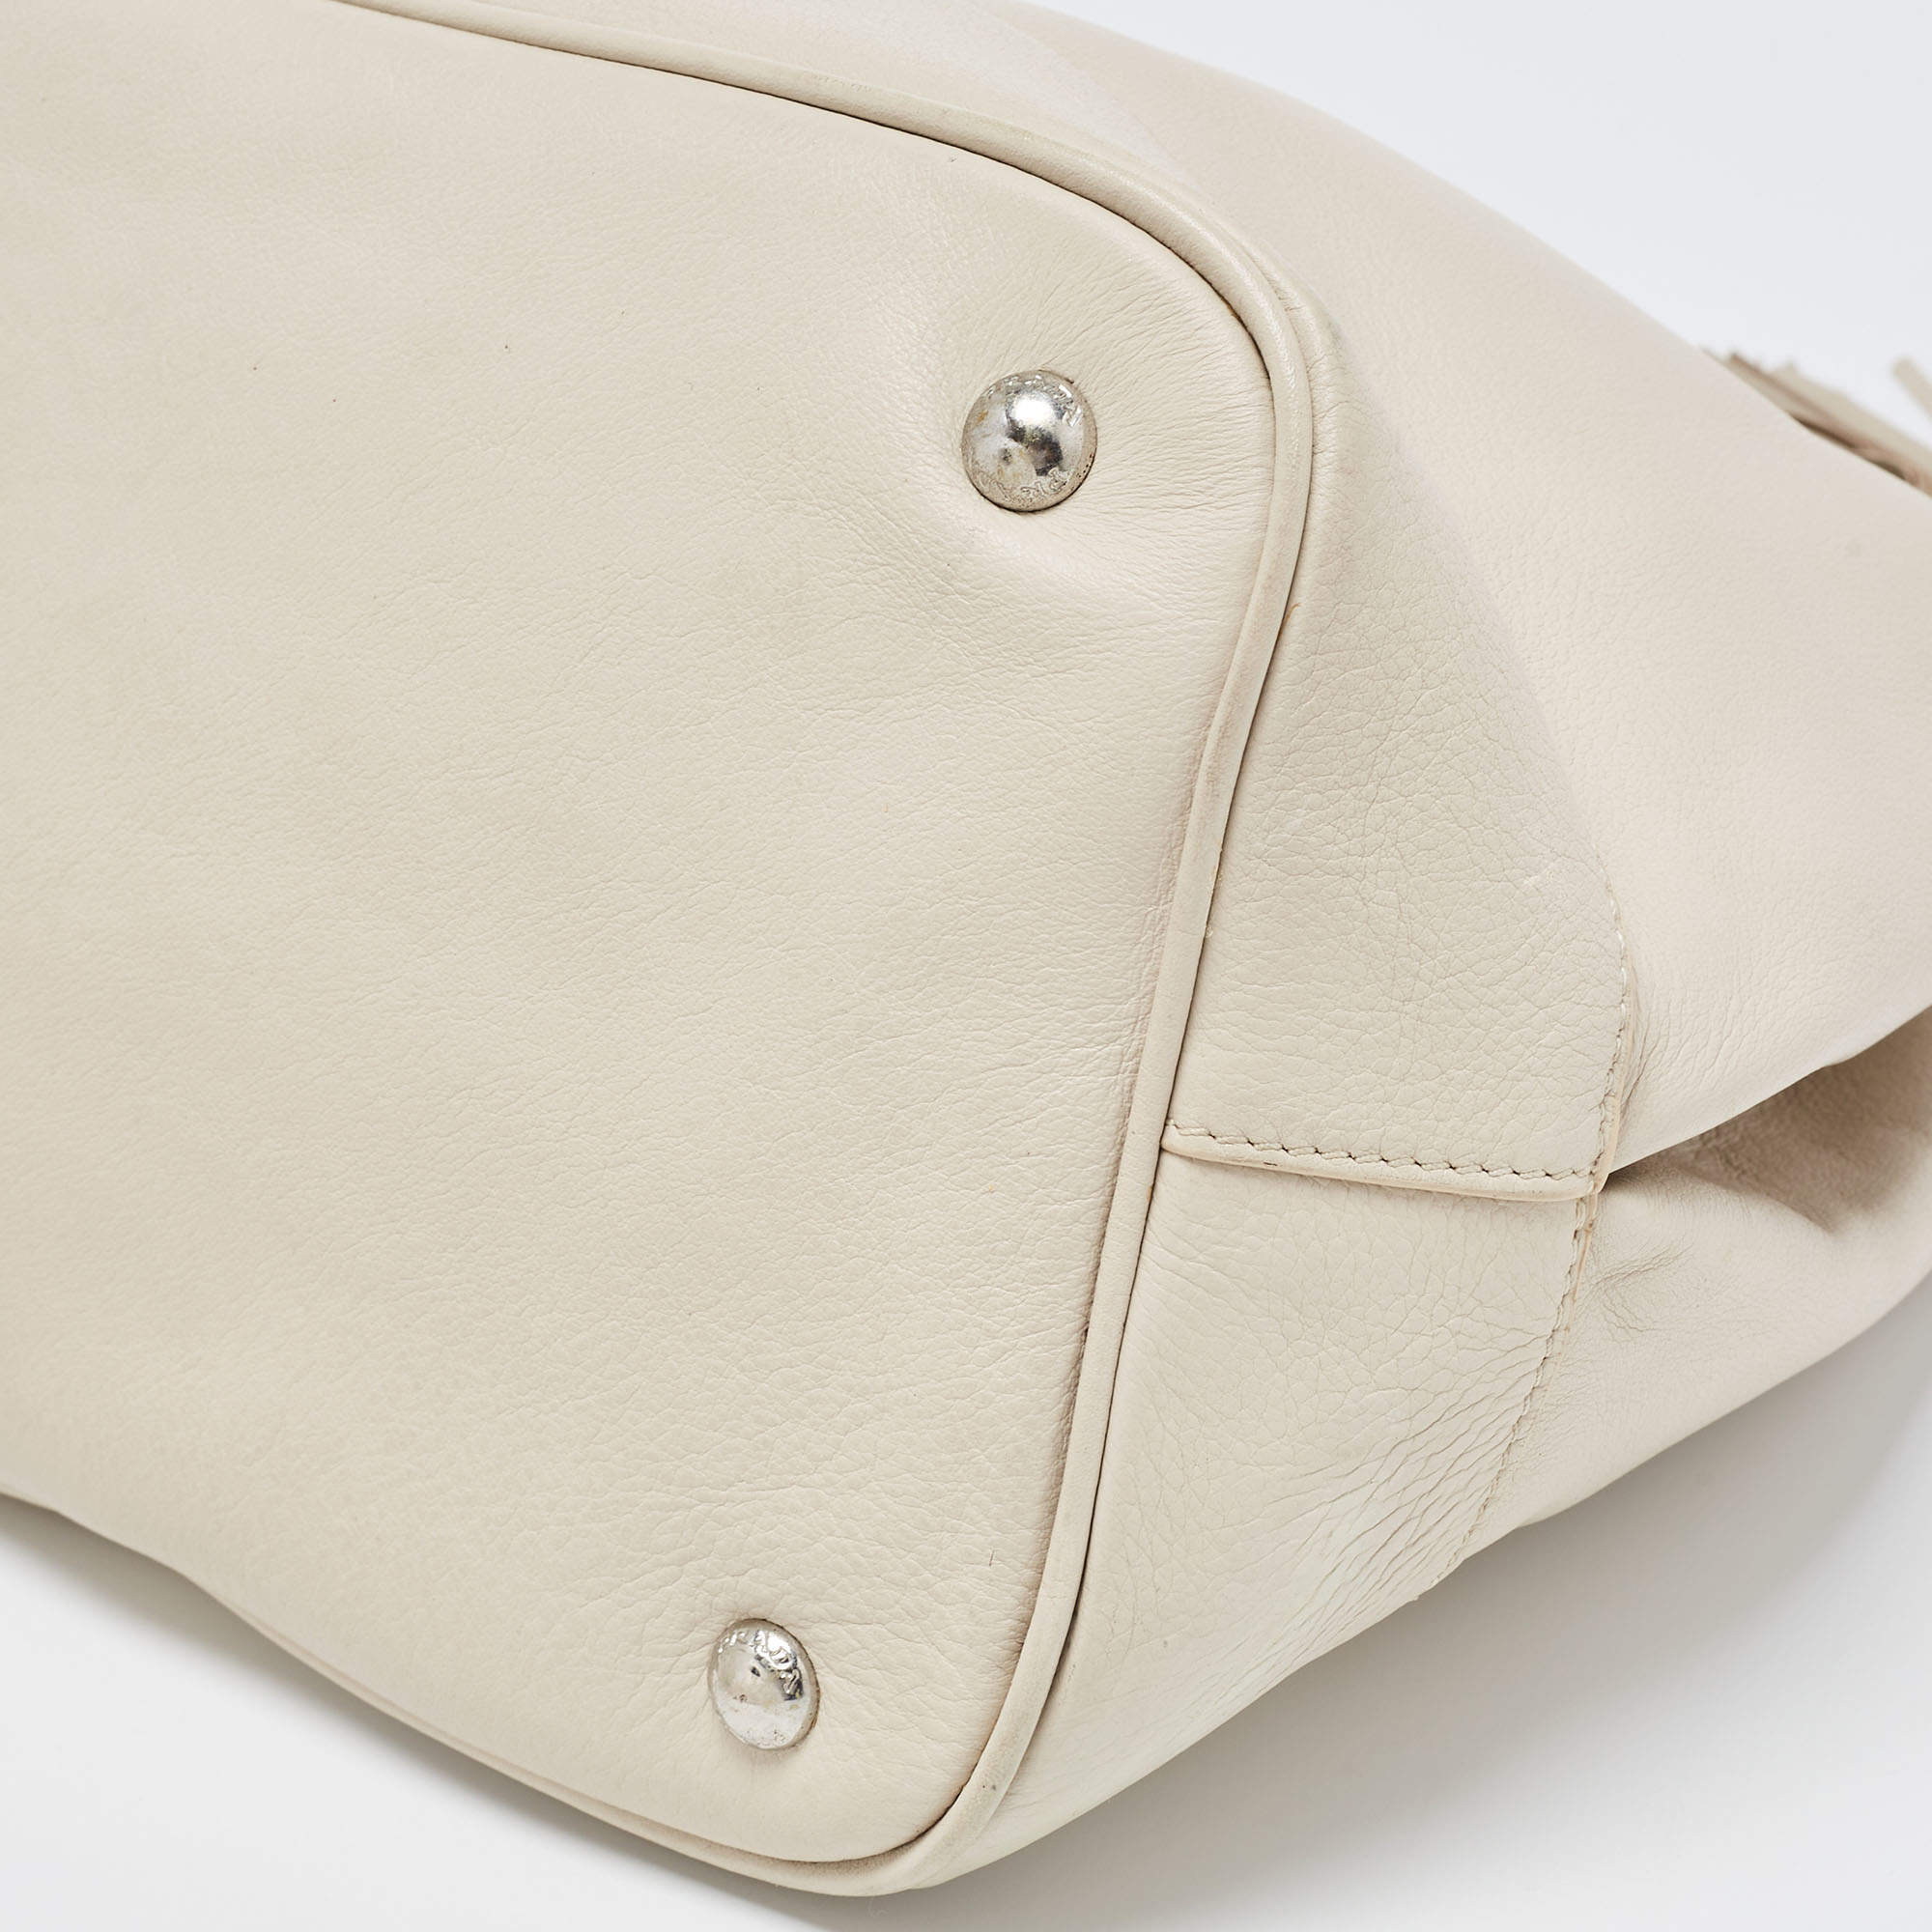 Prada Off White Leather Drawstring Tassel Bucket Bag Prada